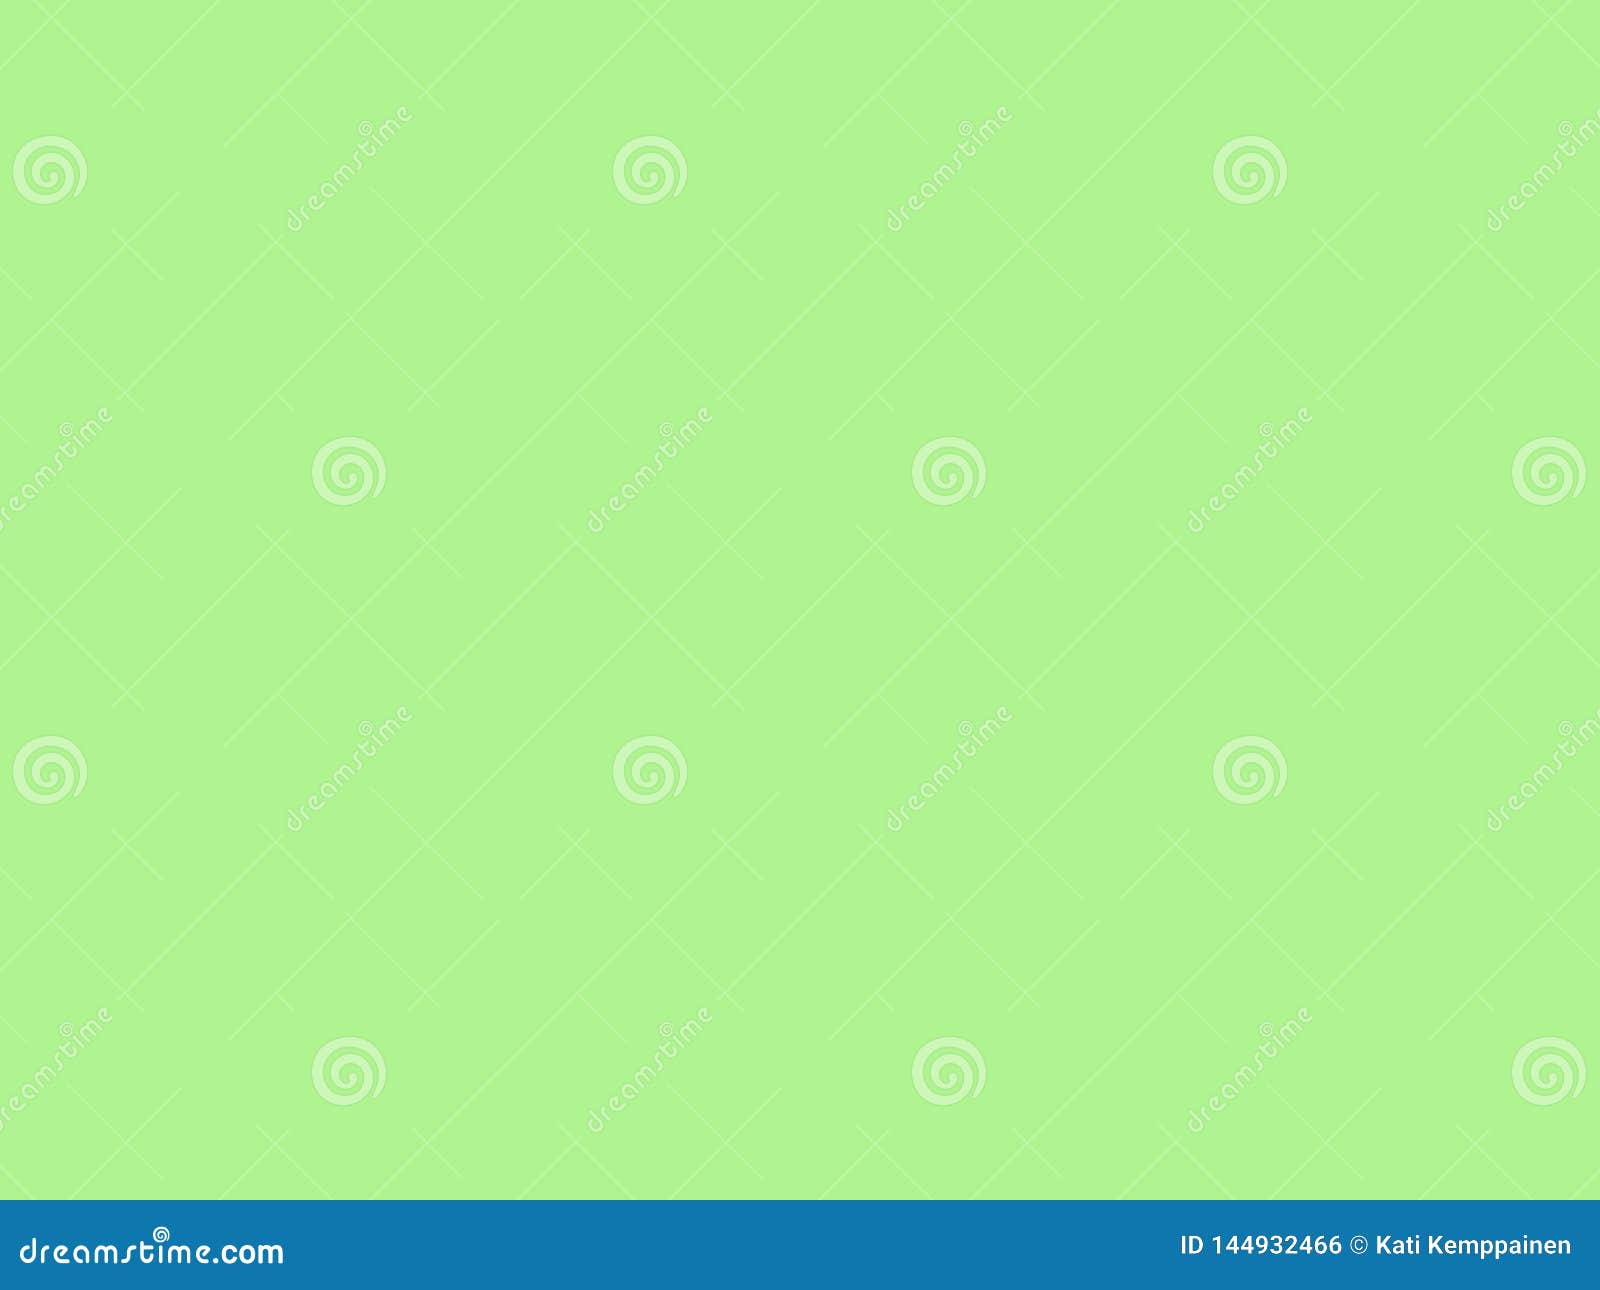 Plain Green Background Green Wallpaper Stock Image  Image of wallpaper  template 144750049